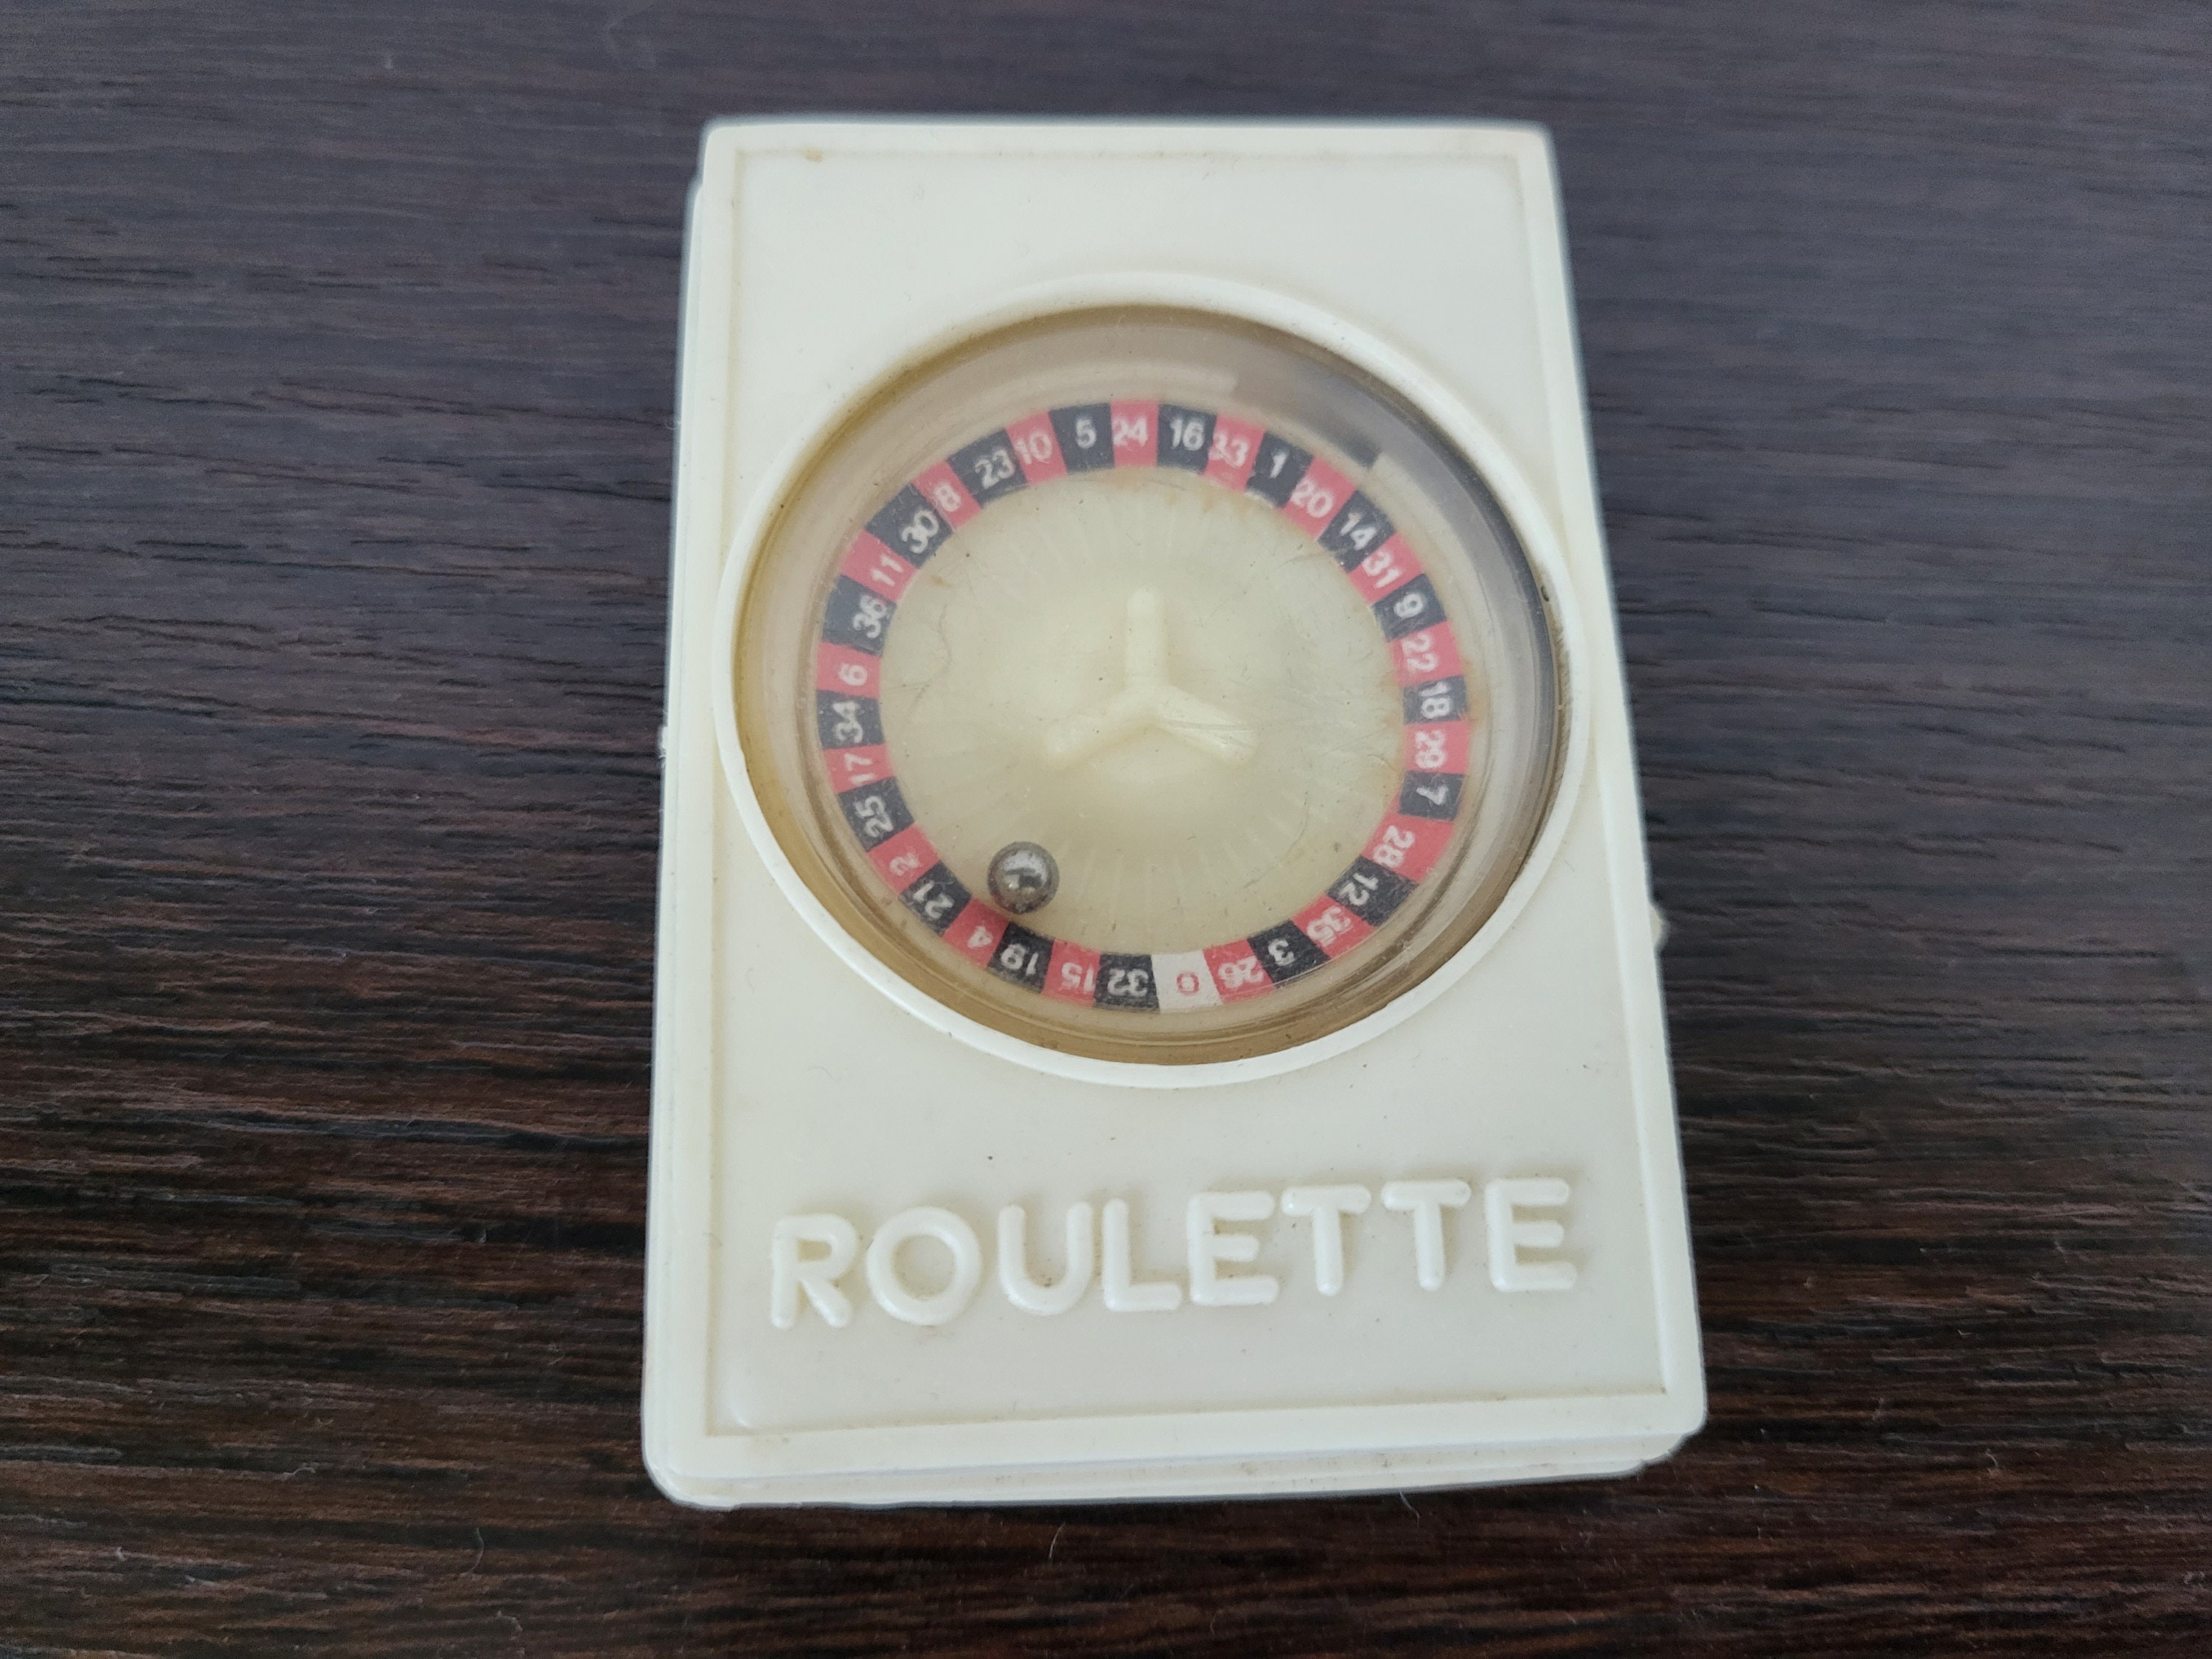 Russian Roulette Toy  Buy russian roulette toy with free shipping on  AliExpress!